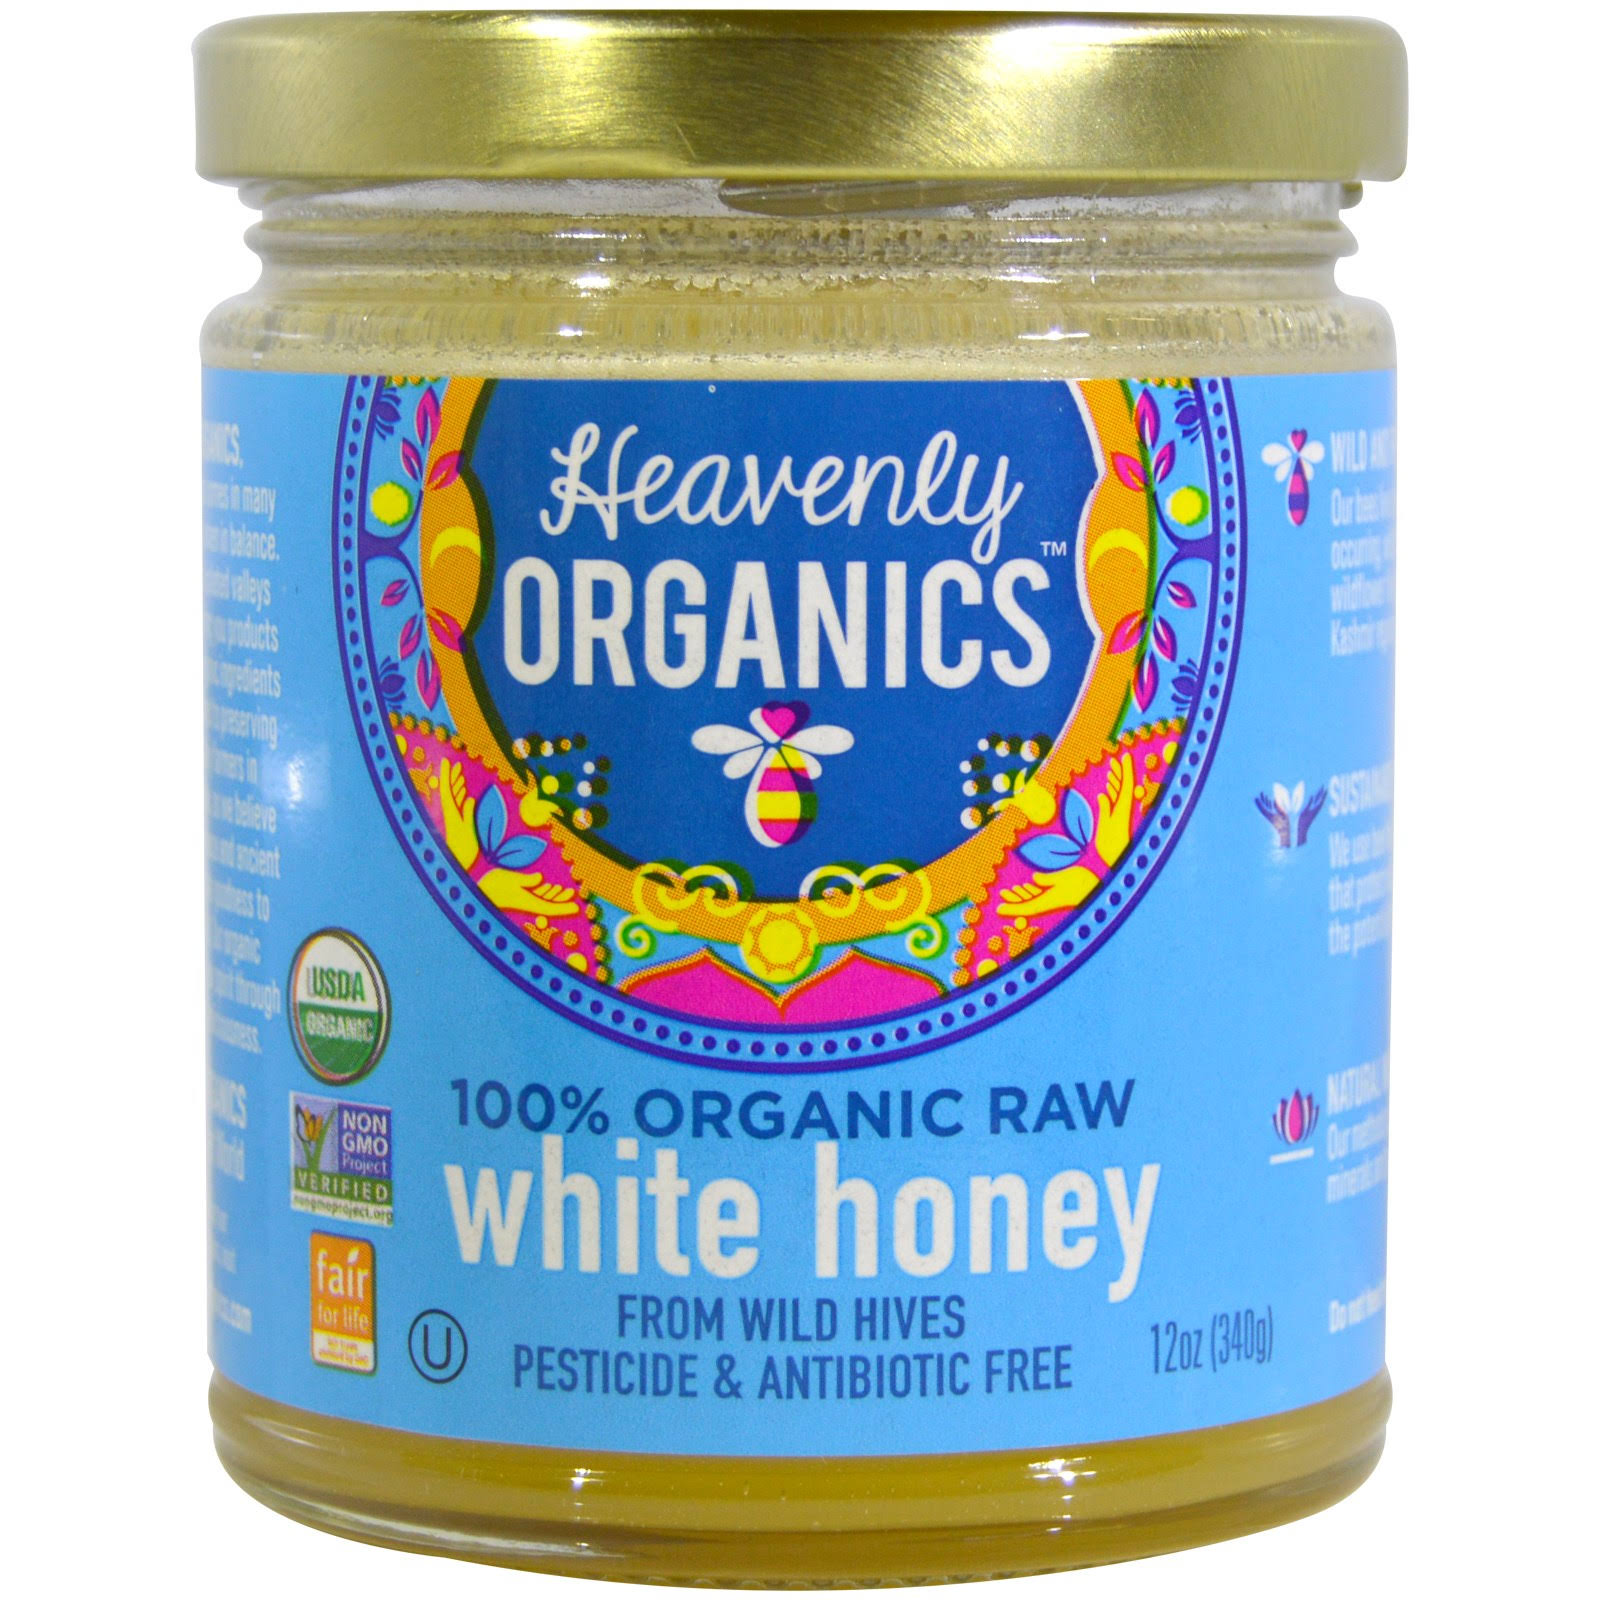 Heavenly Organics 100% Organic Raw White Honey - 12 oz